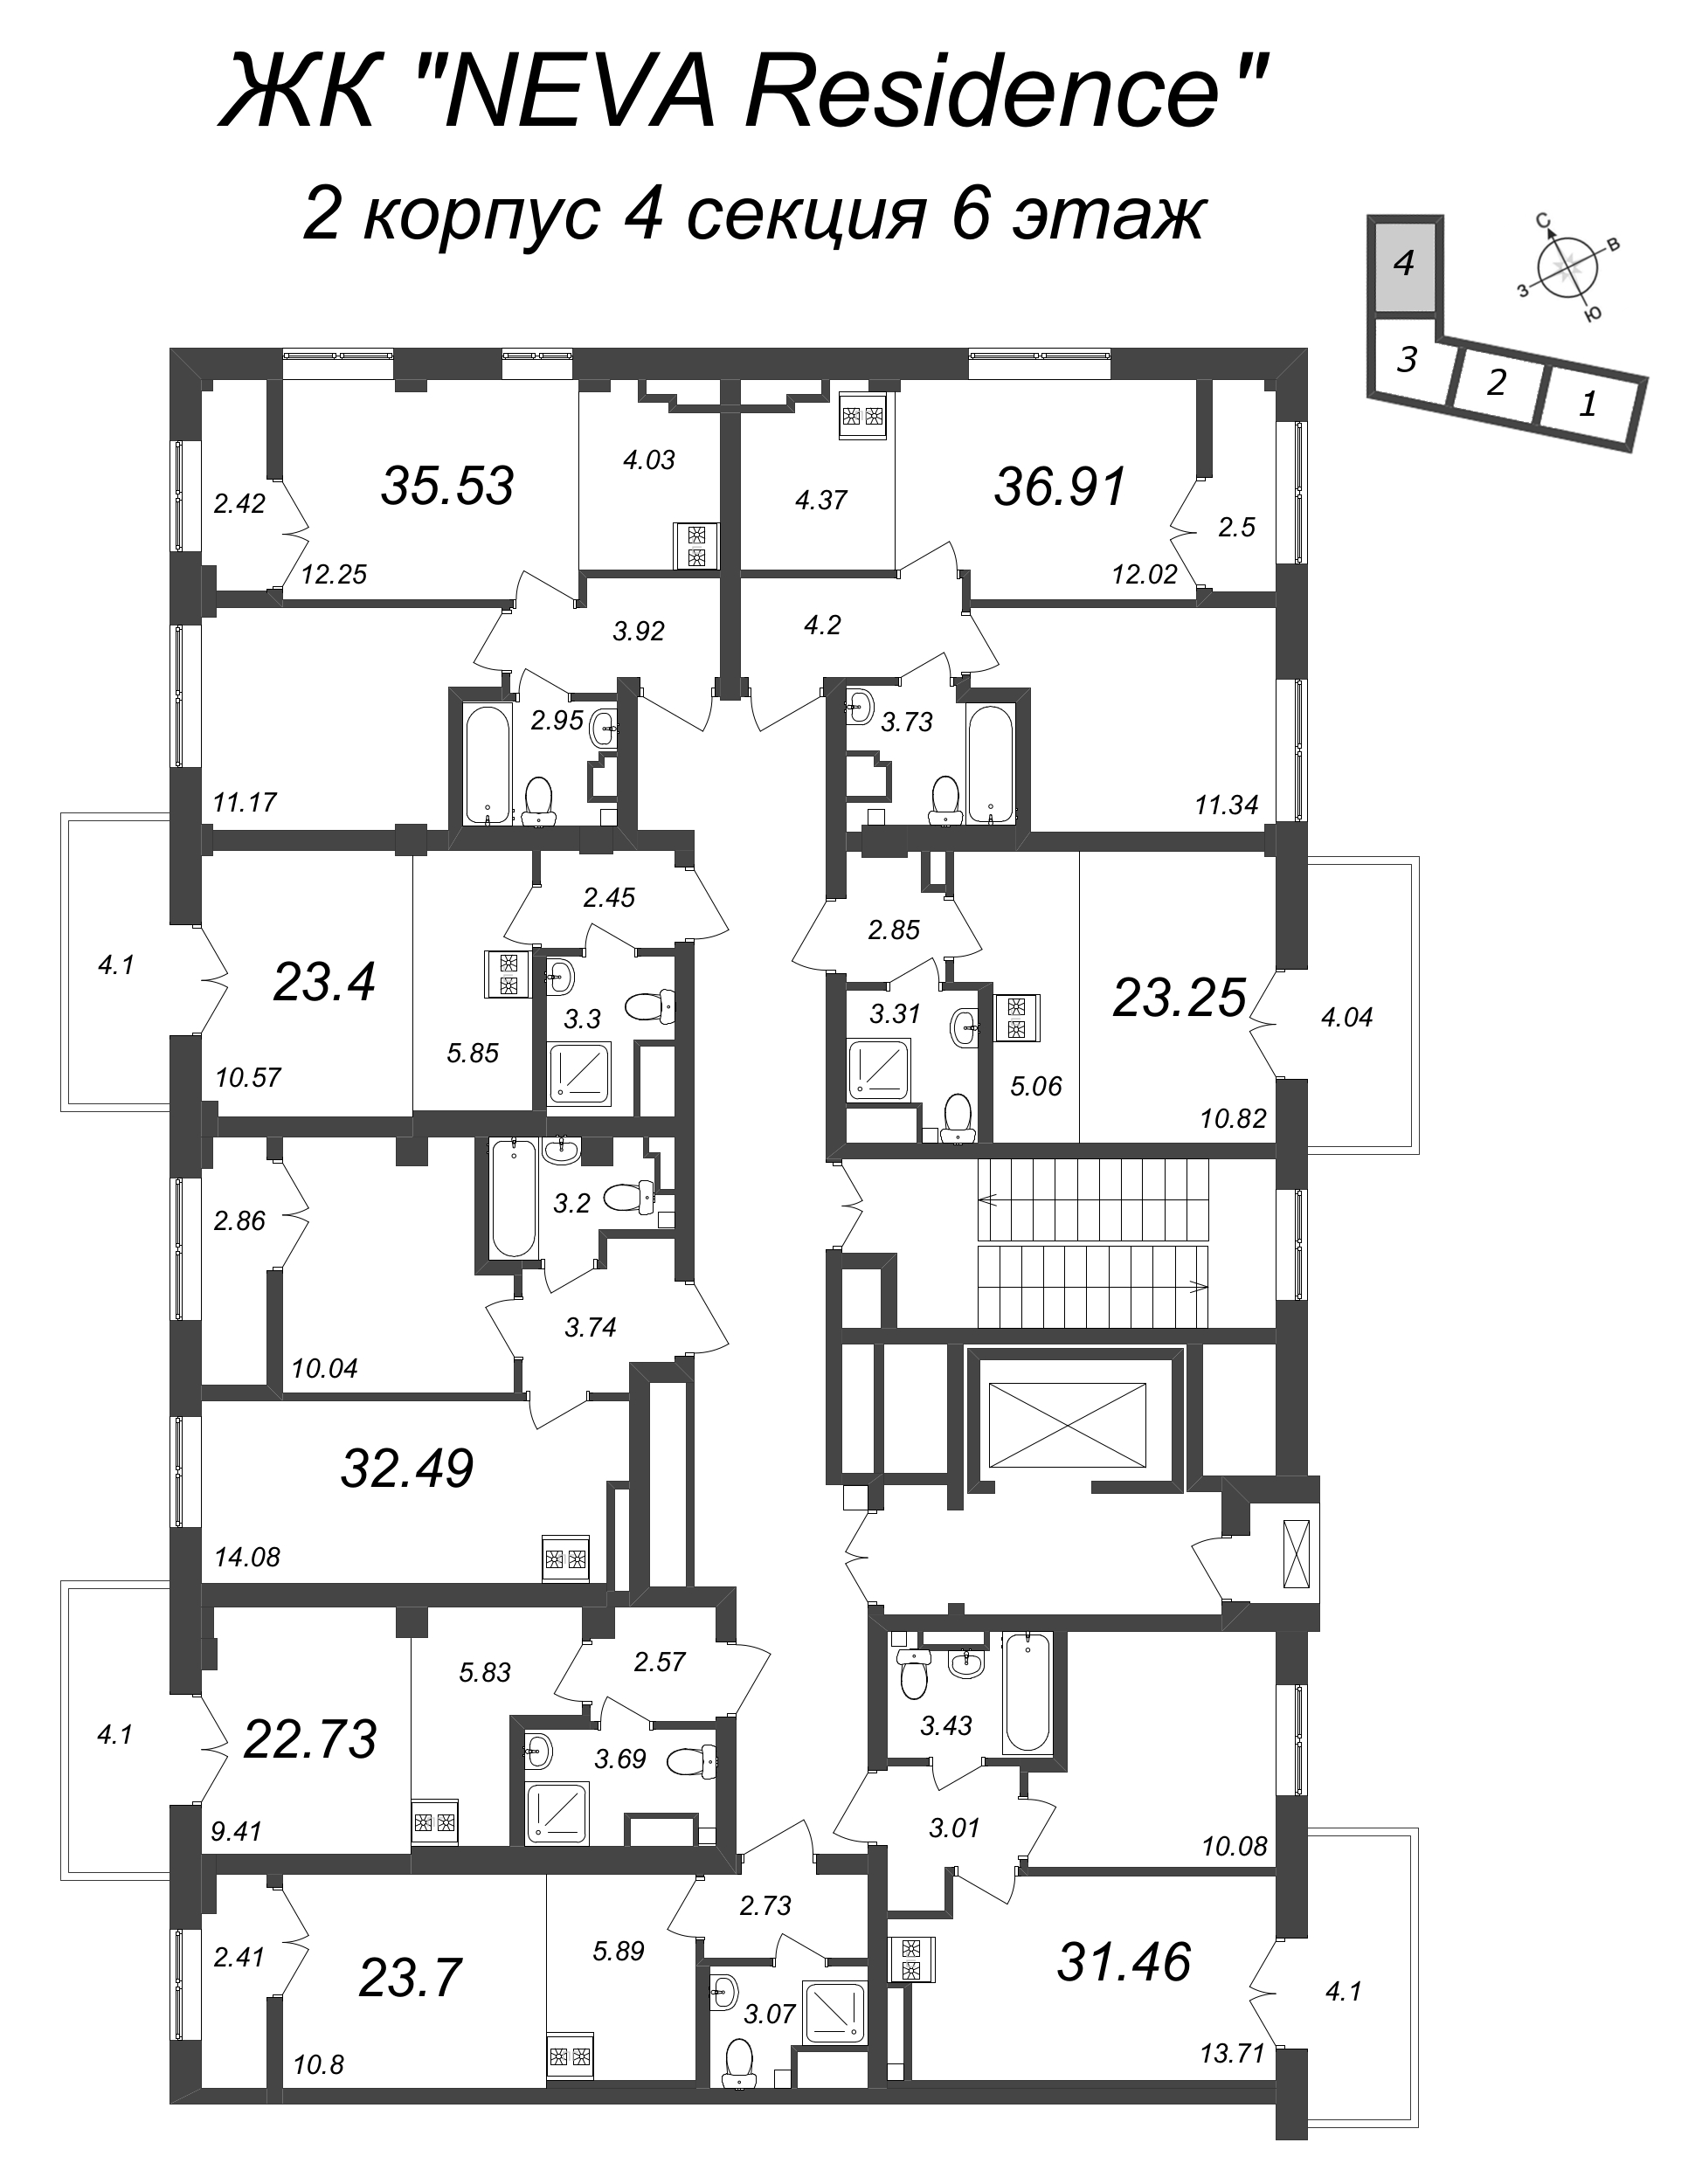 2-комнатная (Евро) квартира, 36.91 м² - планировка этажа